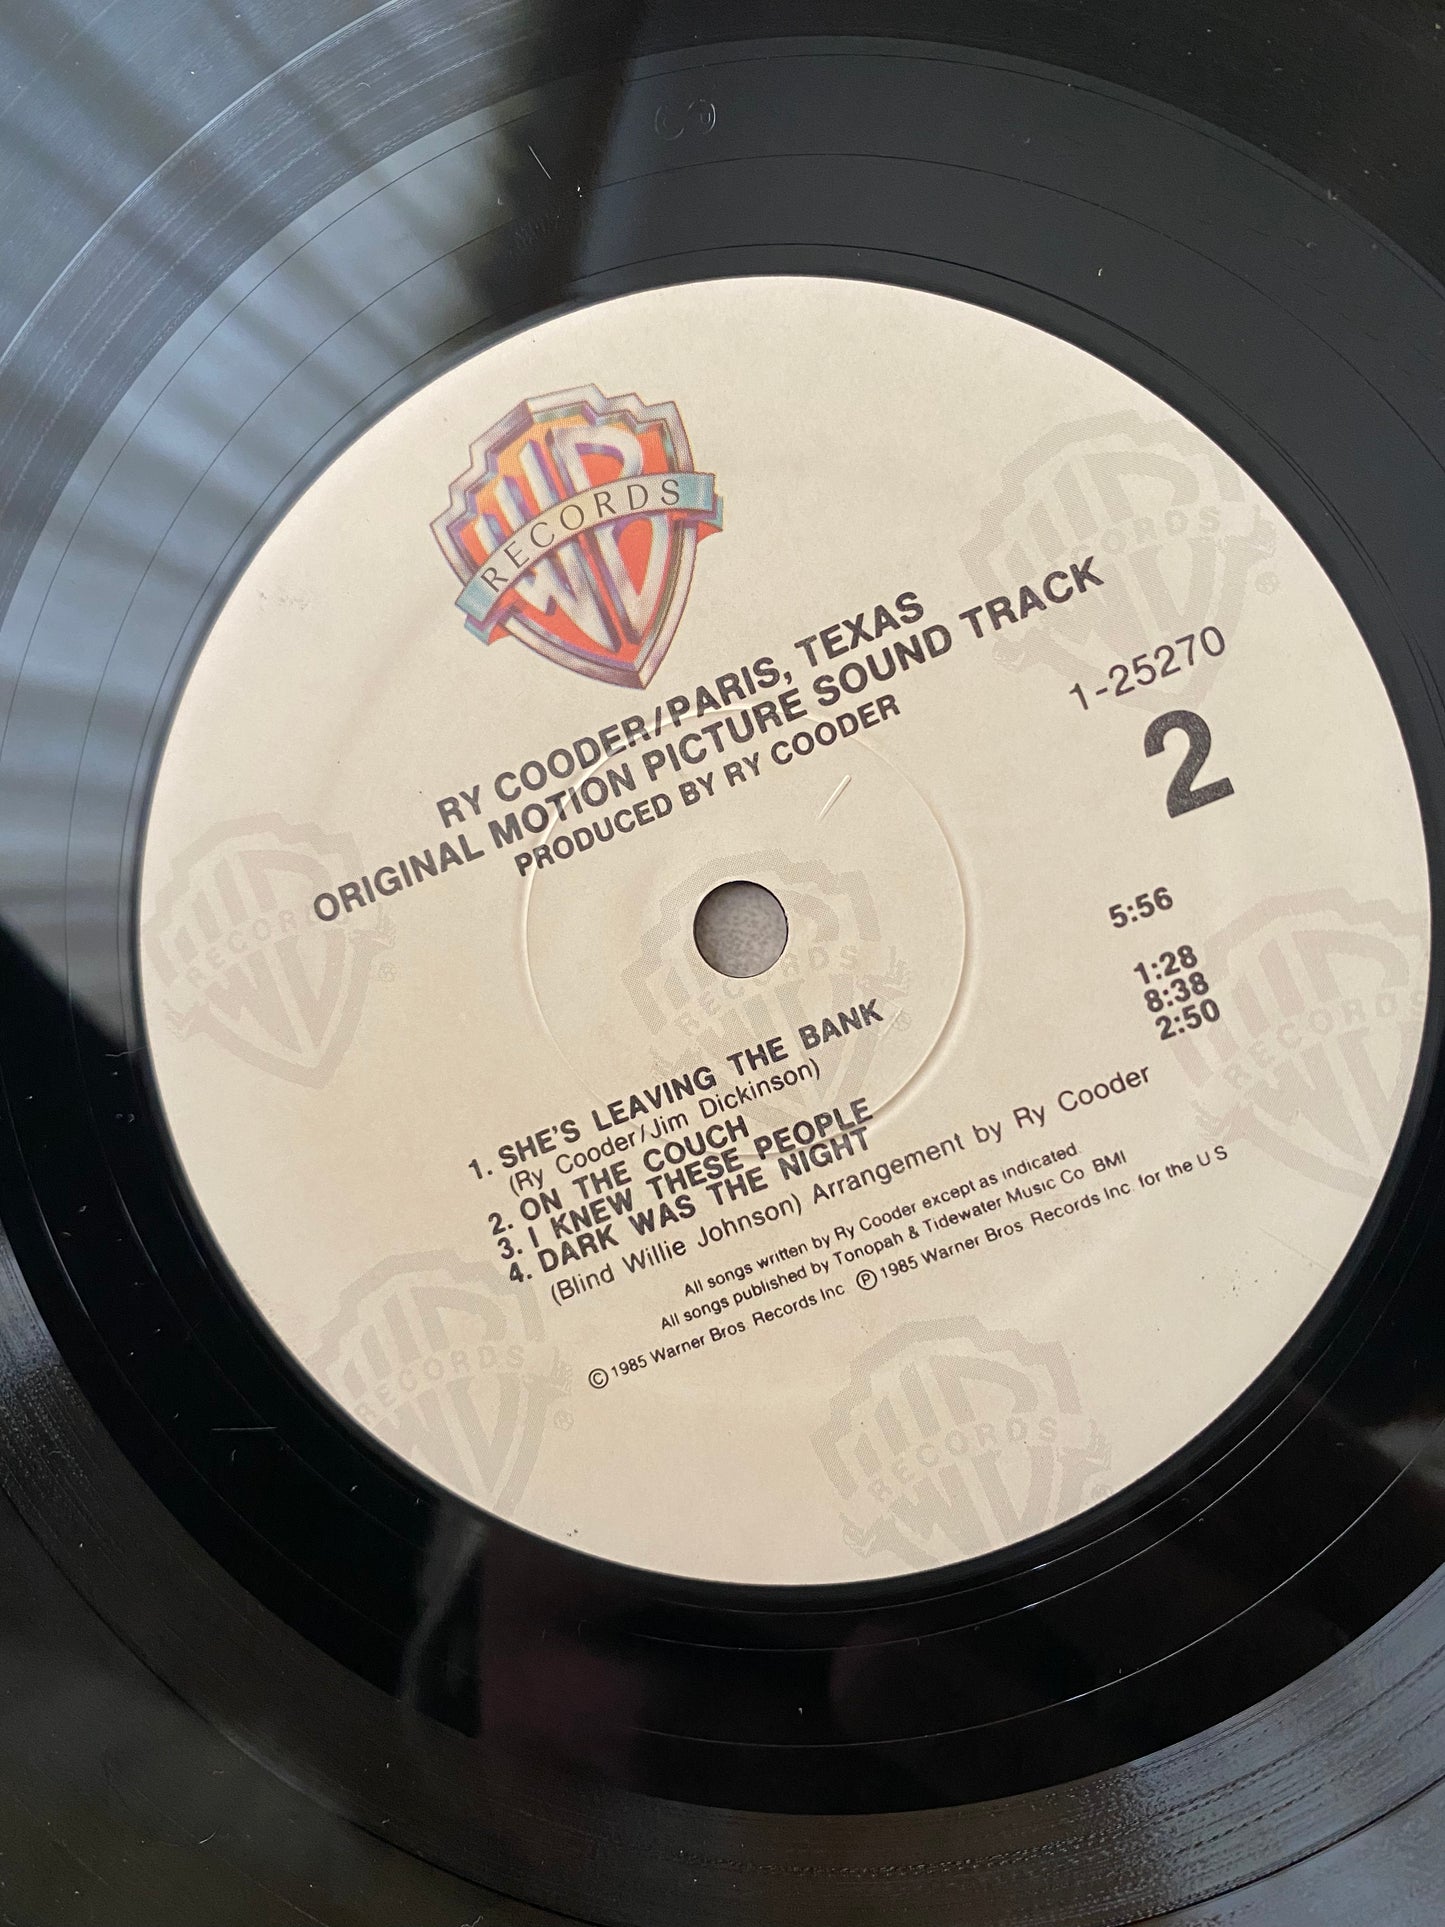 Ry Cooper - Paris, Texas Original Motion Picture Soundtrack LP Vinyl (1985)